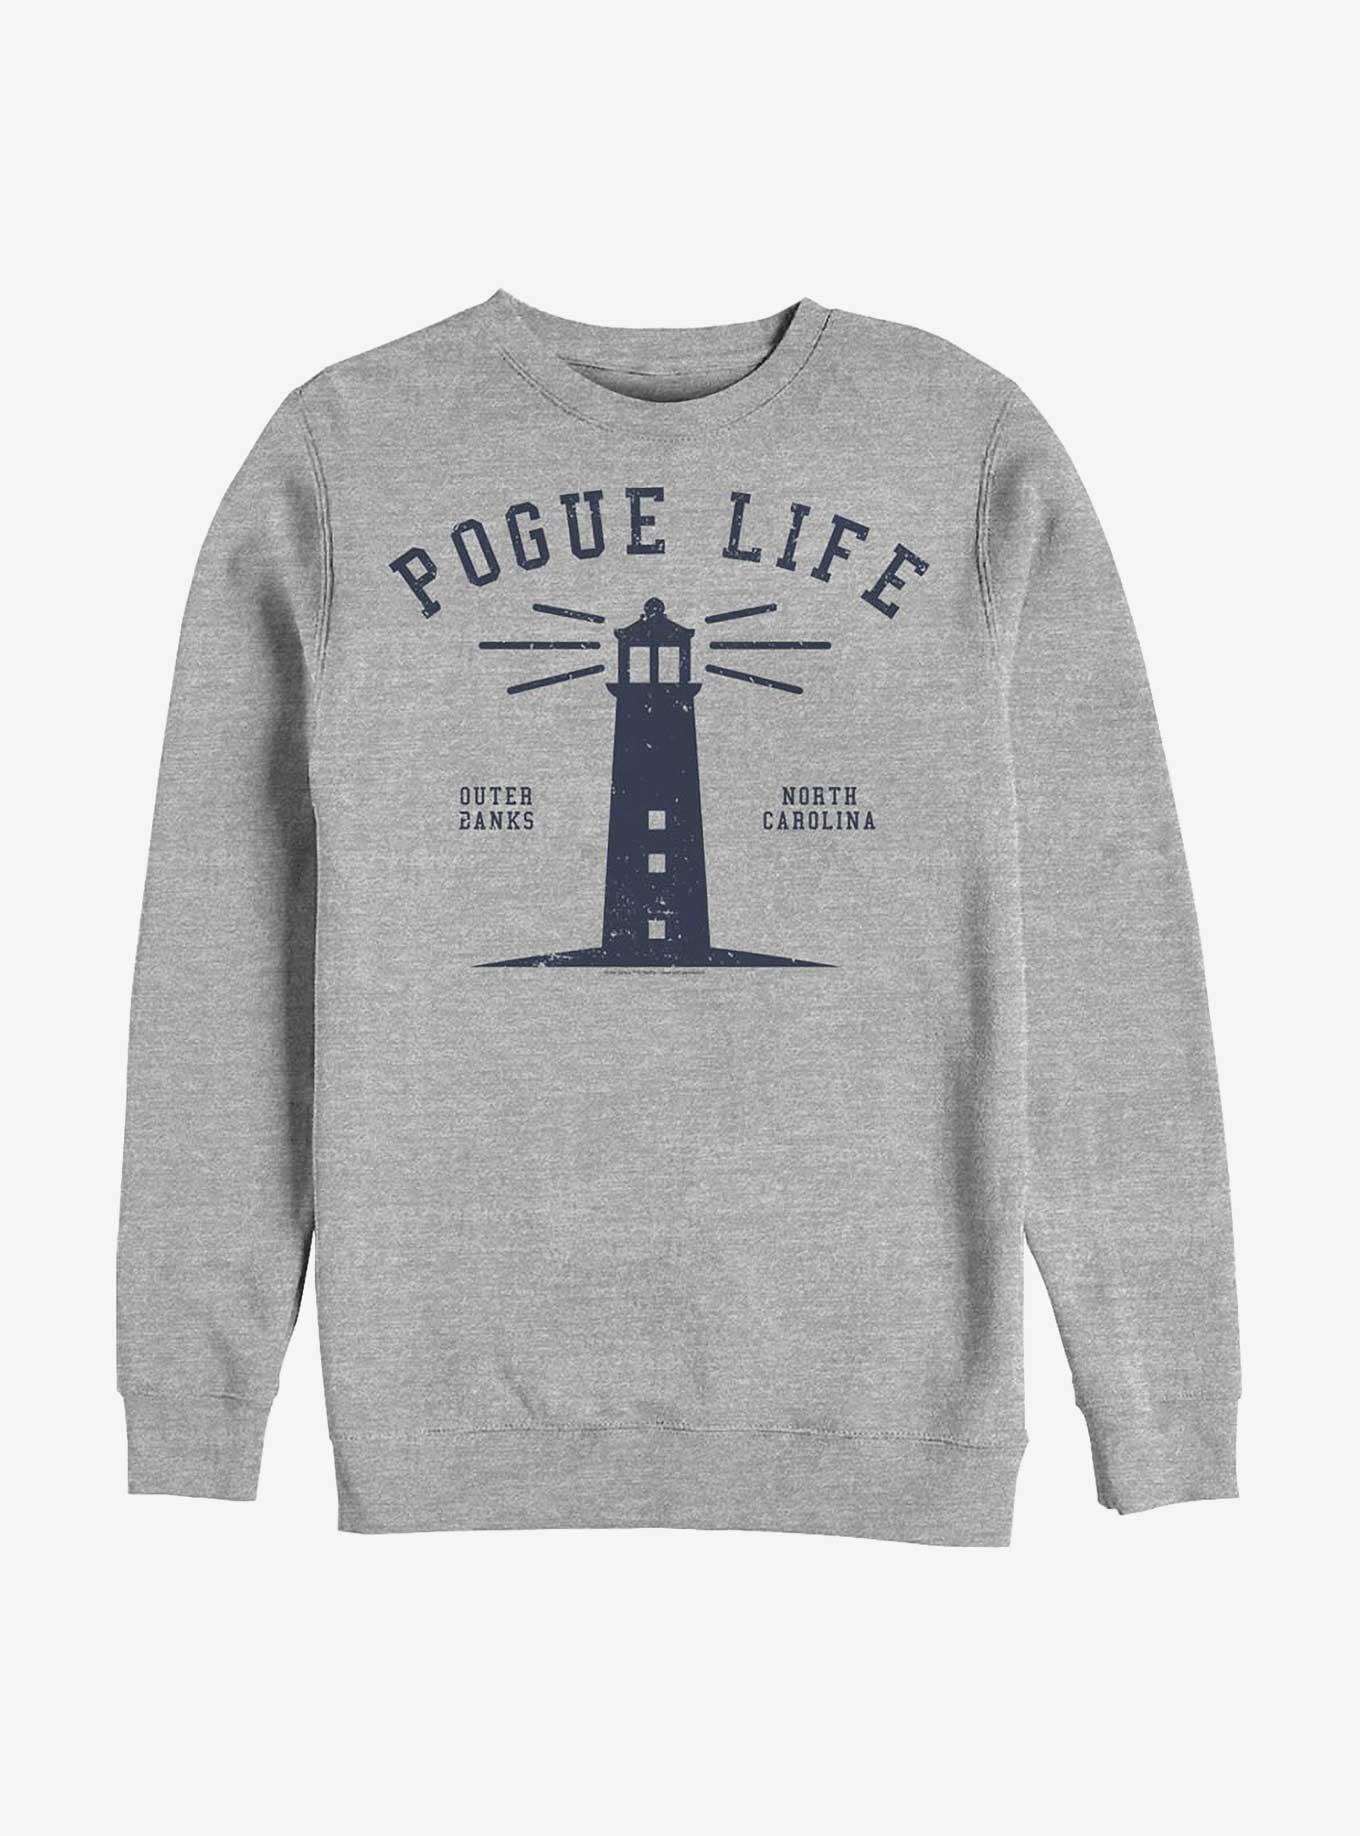 Outer Banks Pogue Life Lifehouse Sweatshirt, ATH HTR, hi-res